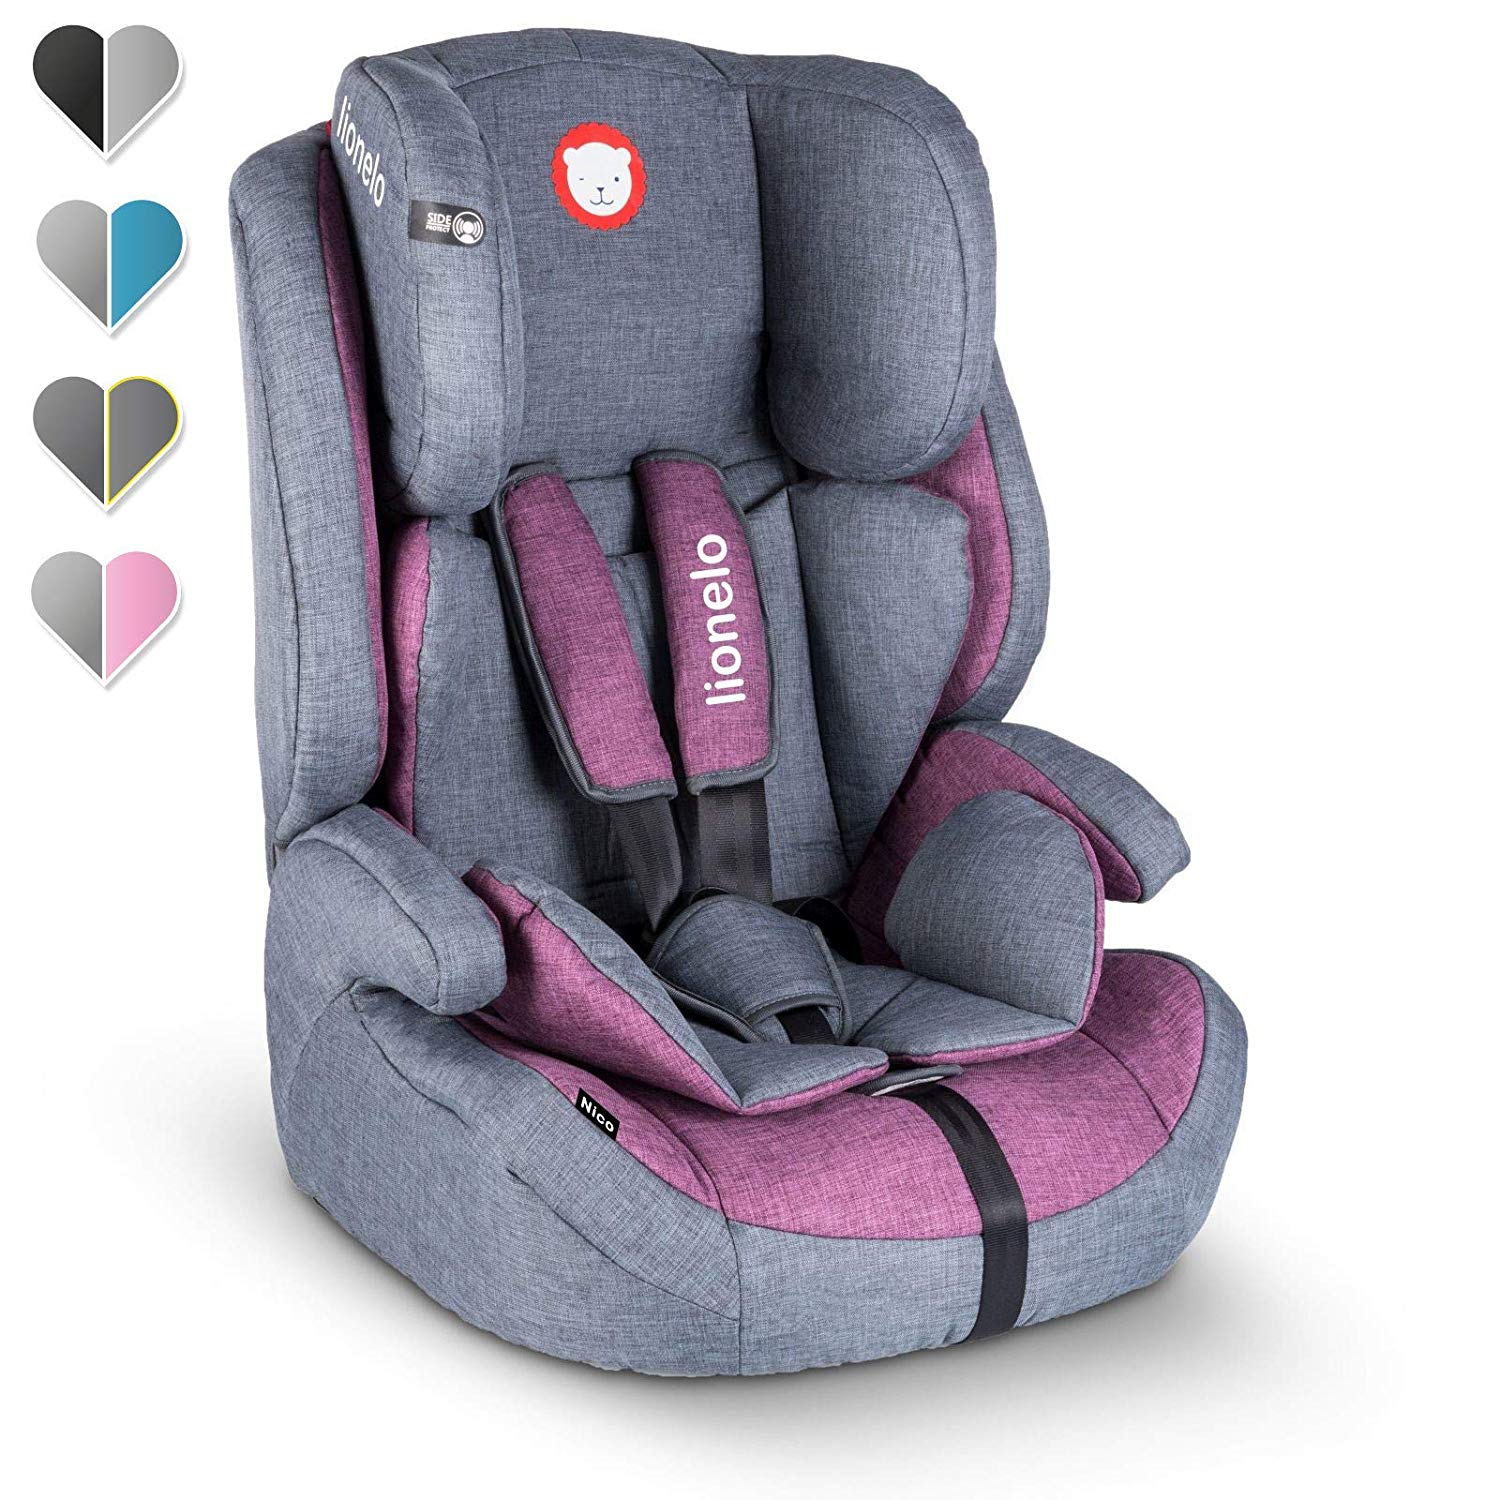 Lionelo Nico Child Car Seat, Group 1, 2, 3, 9-36 kg, Side Protection, 5-Point Seat Belt, Removable Backrest, Adjustable Headrest, ECE R44 04 Purple